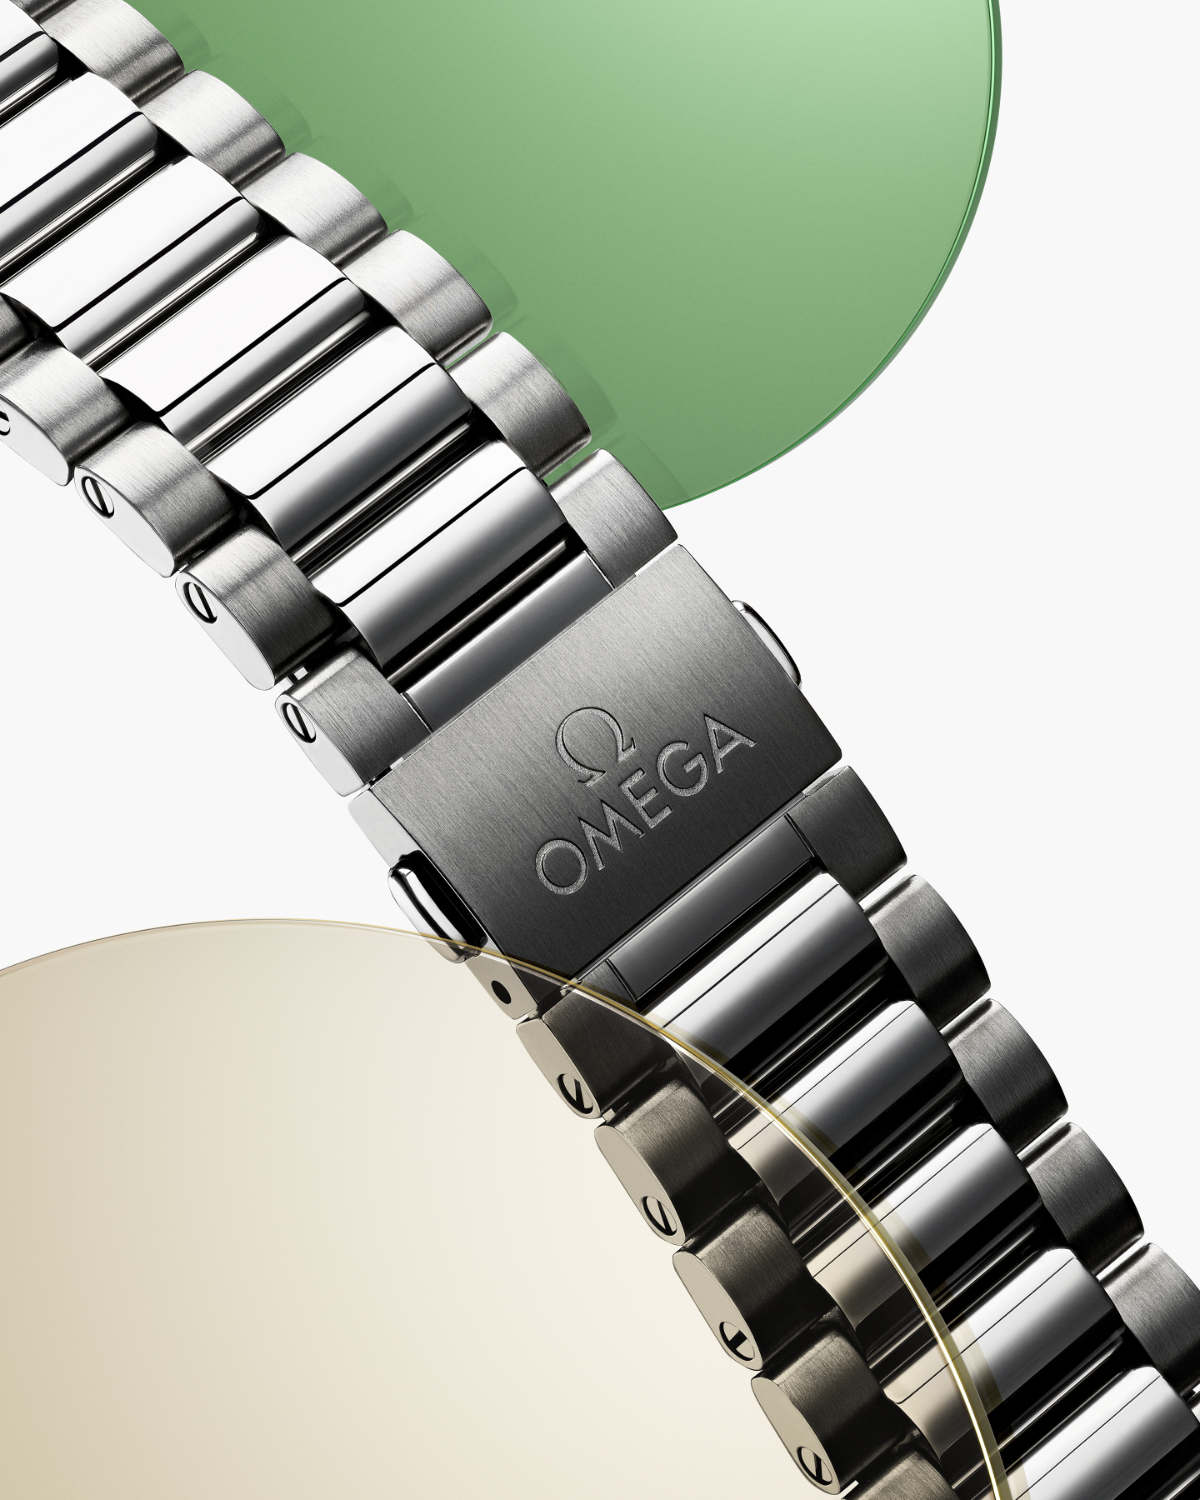 Omega Presents Its New Aqua Terra Shades Watch Collection